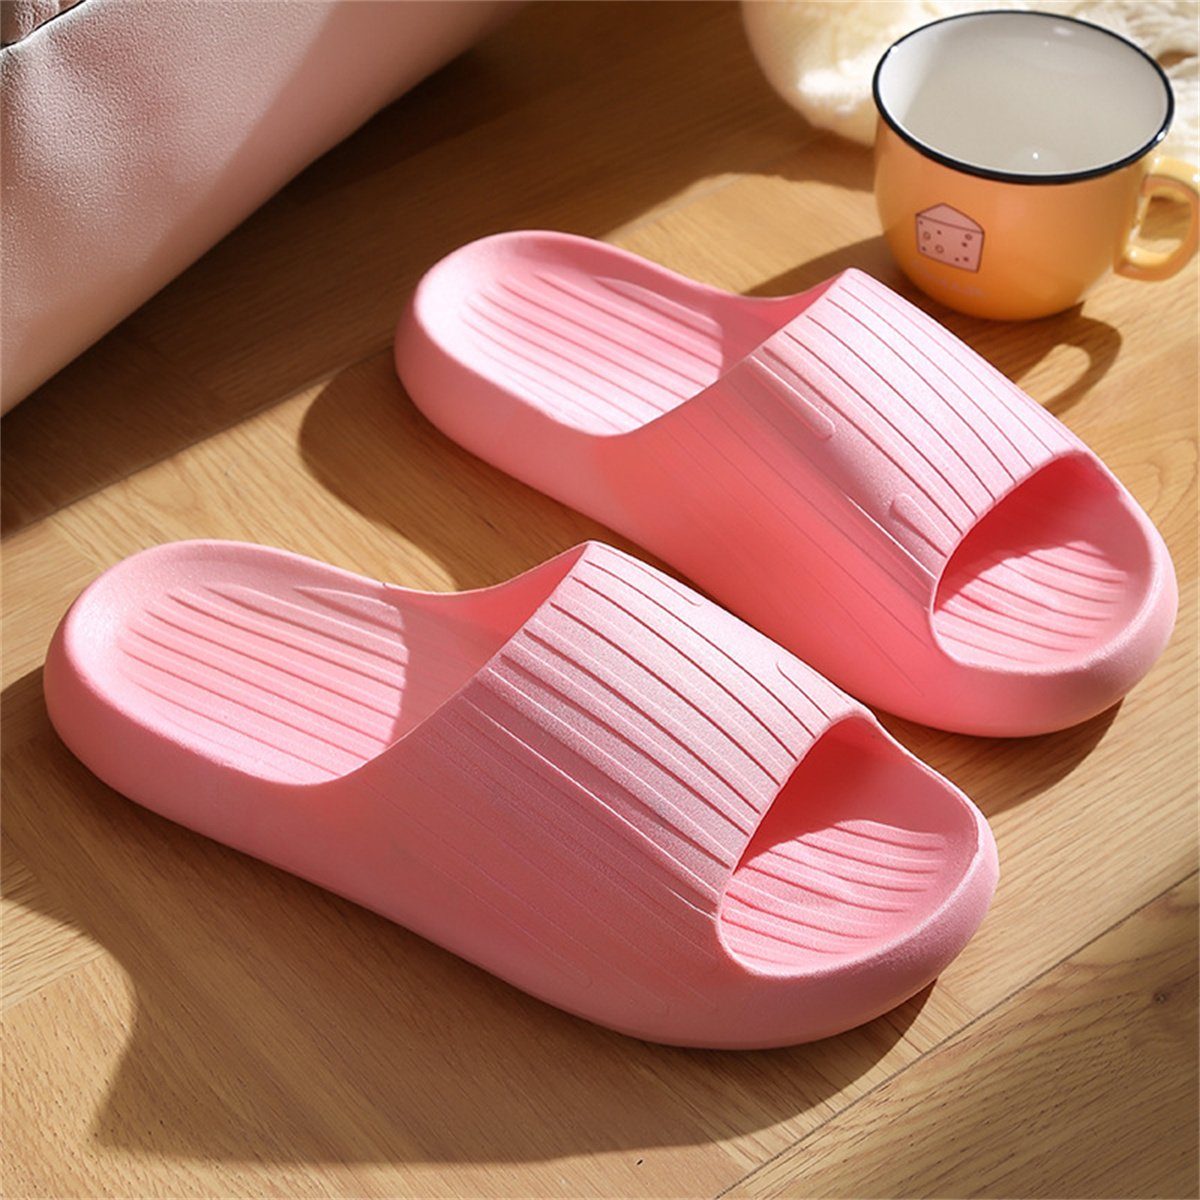 den Innenbereich und Boden carefully Hausschuhe Damen-Sandalen dickem selected mit rosa Badeschuh für